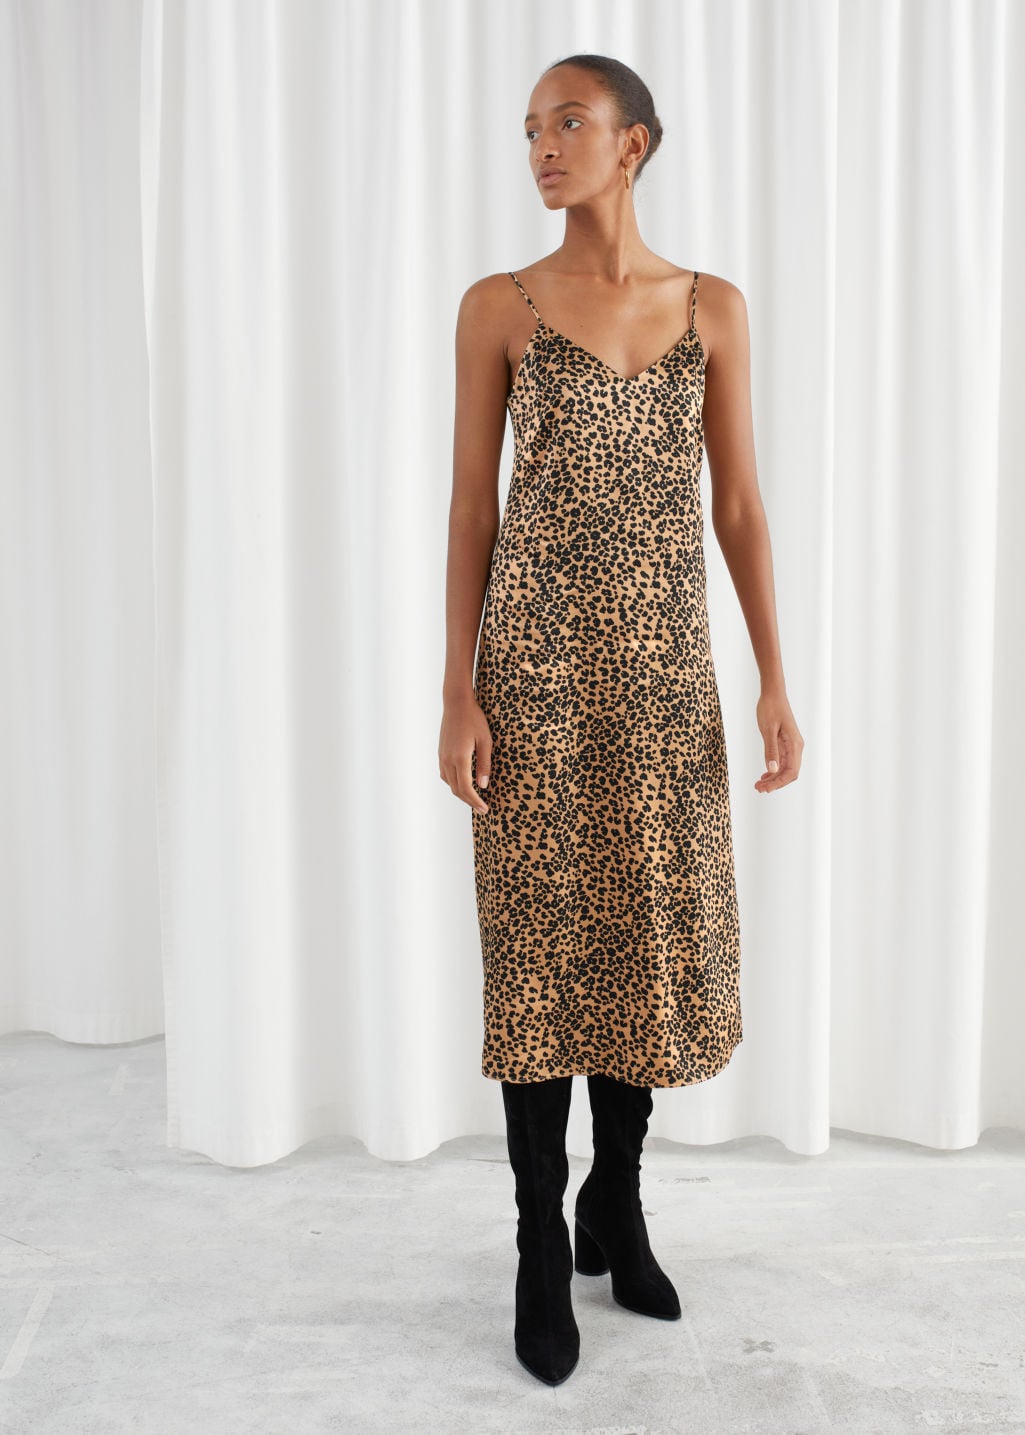 & other stories leopard print dress